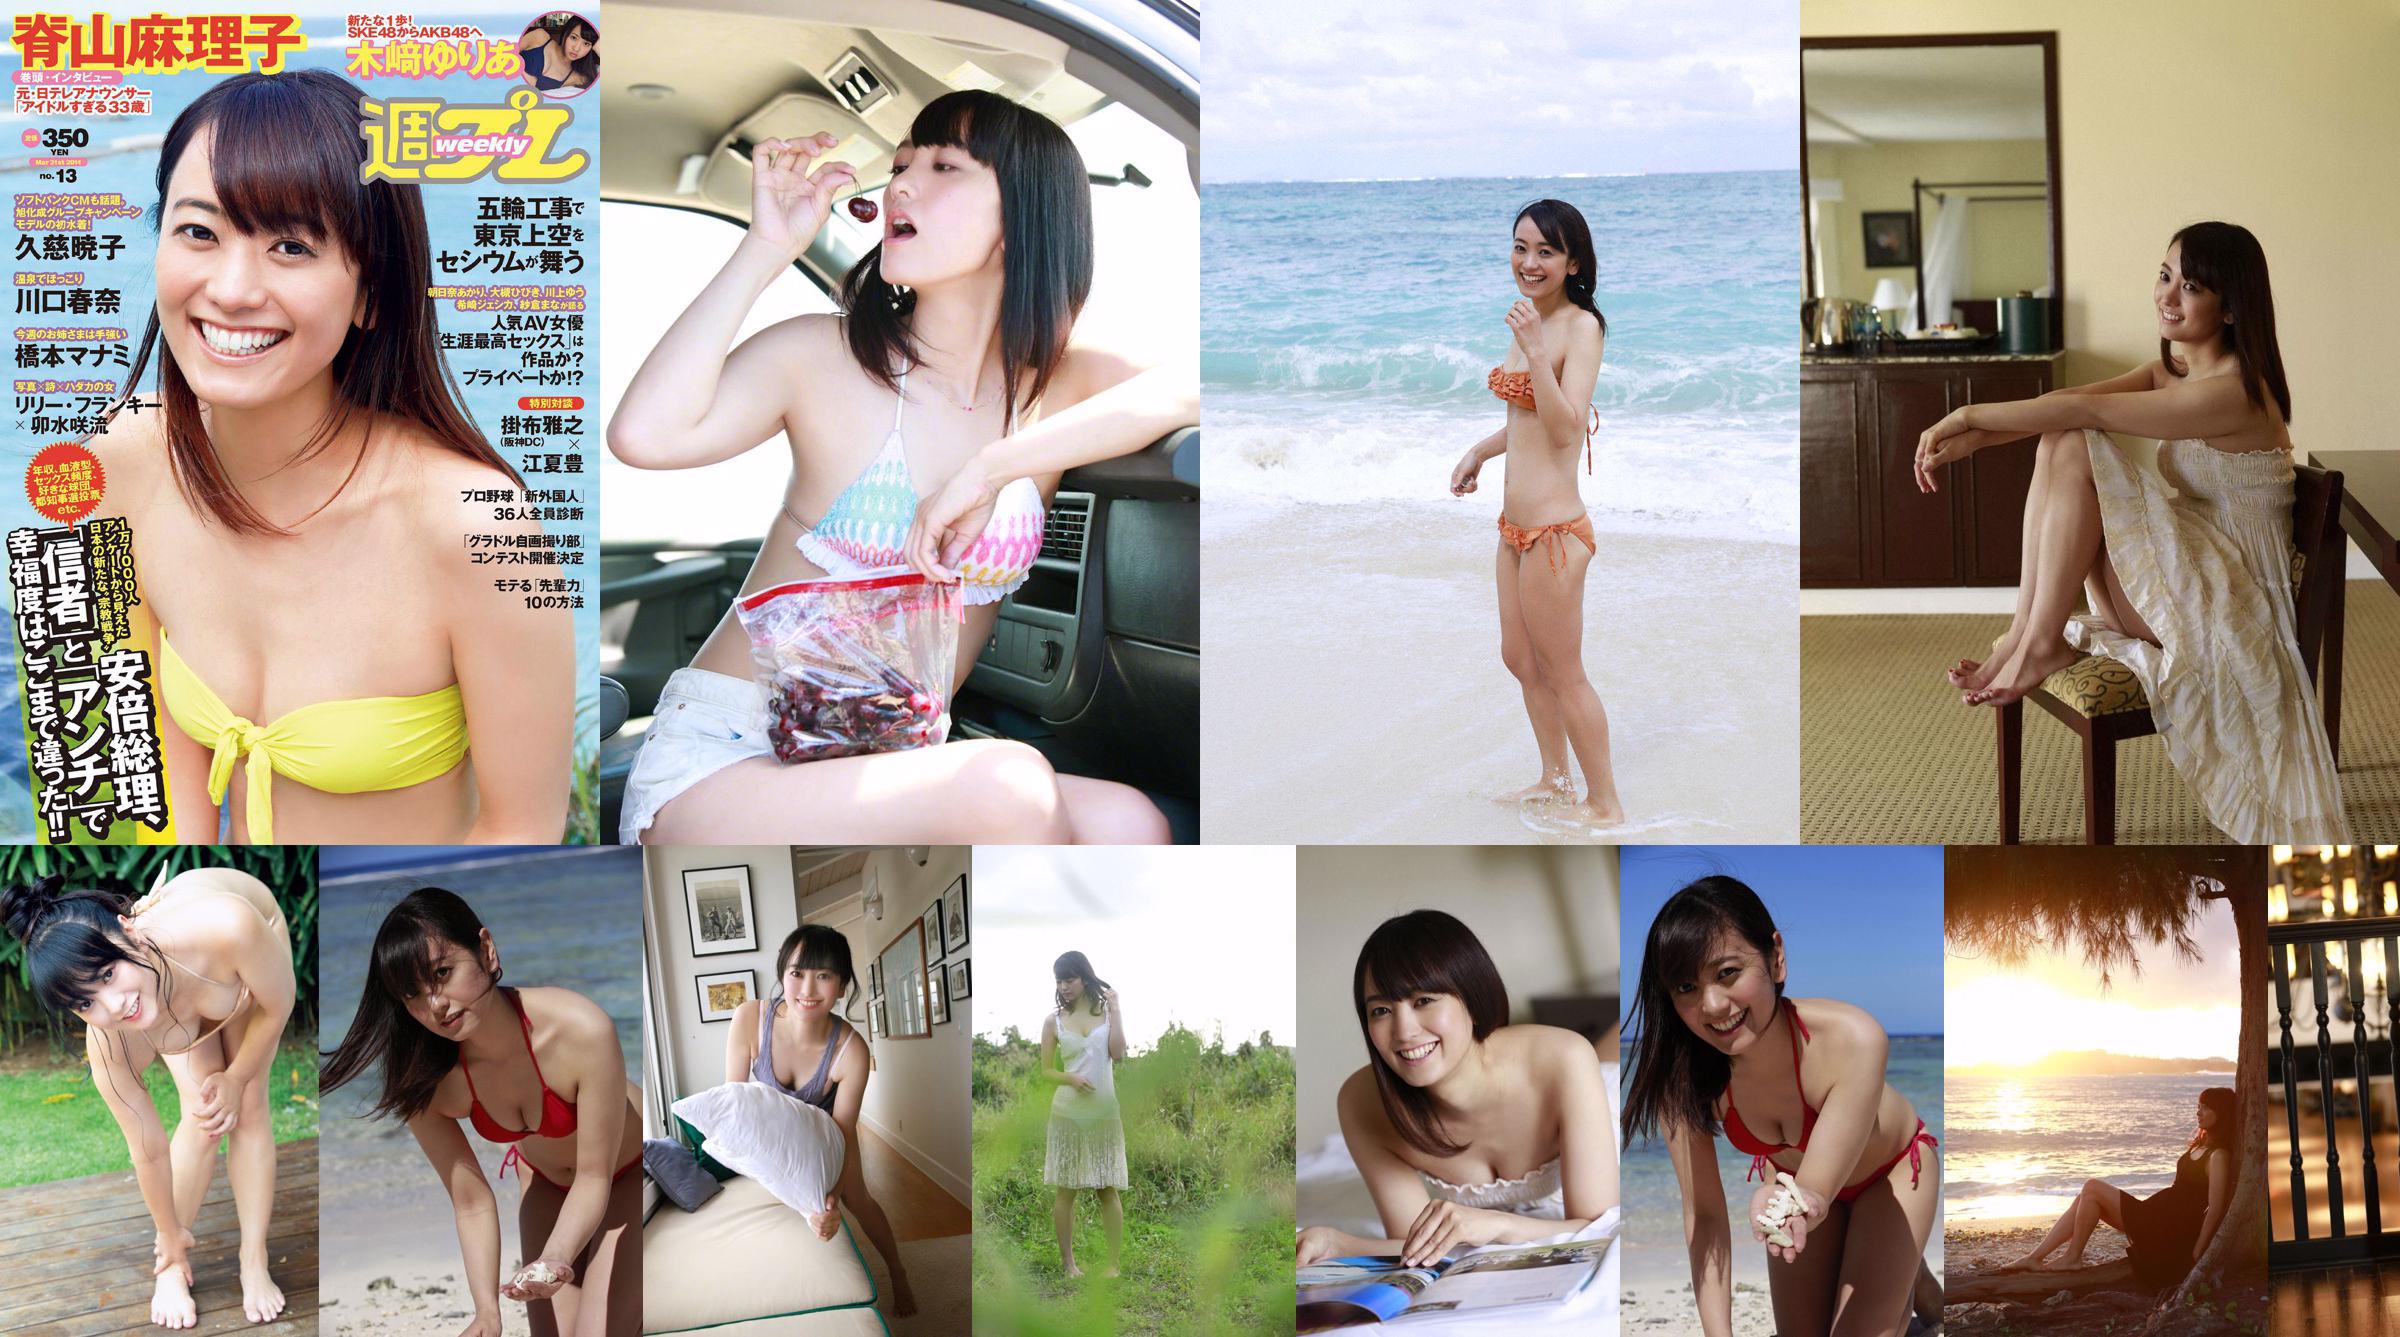 Sariyama Mariko "Aidaru 33 tahun" [WPB-net] No. 165 No.ed18ec Halaman 1